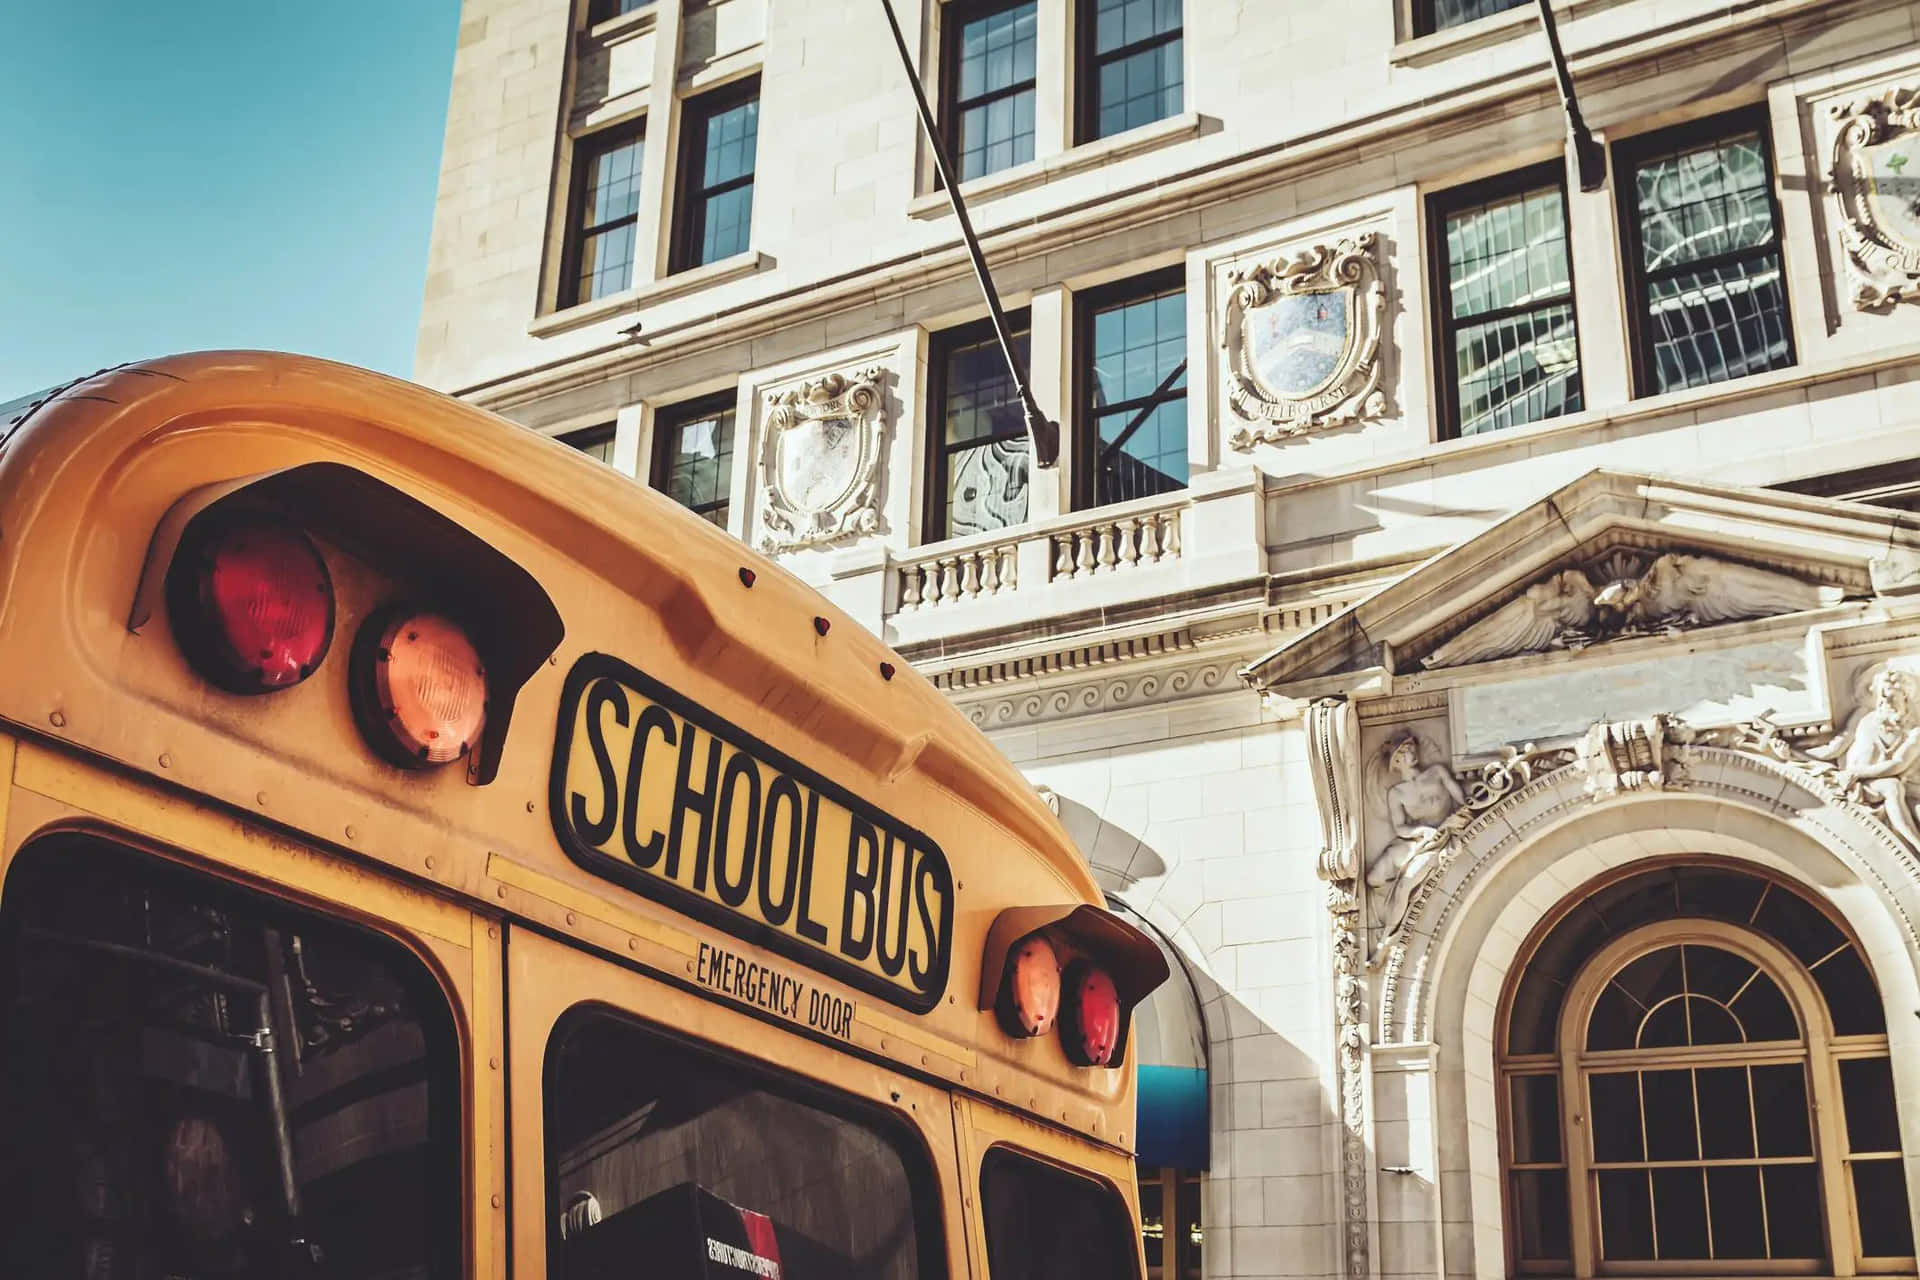 School Bus Outside Classic Building.jpg Wallpaper